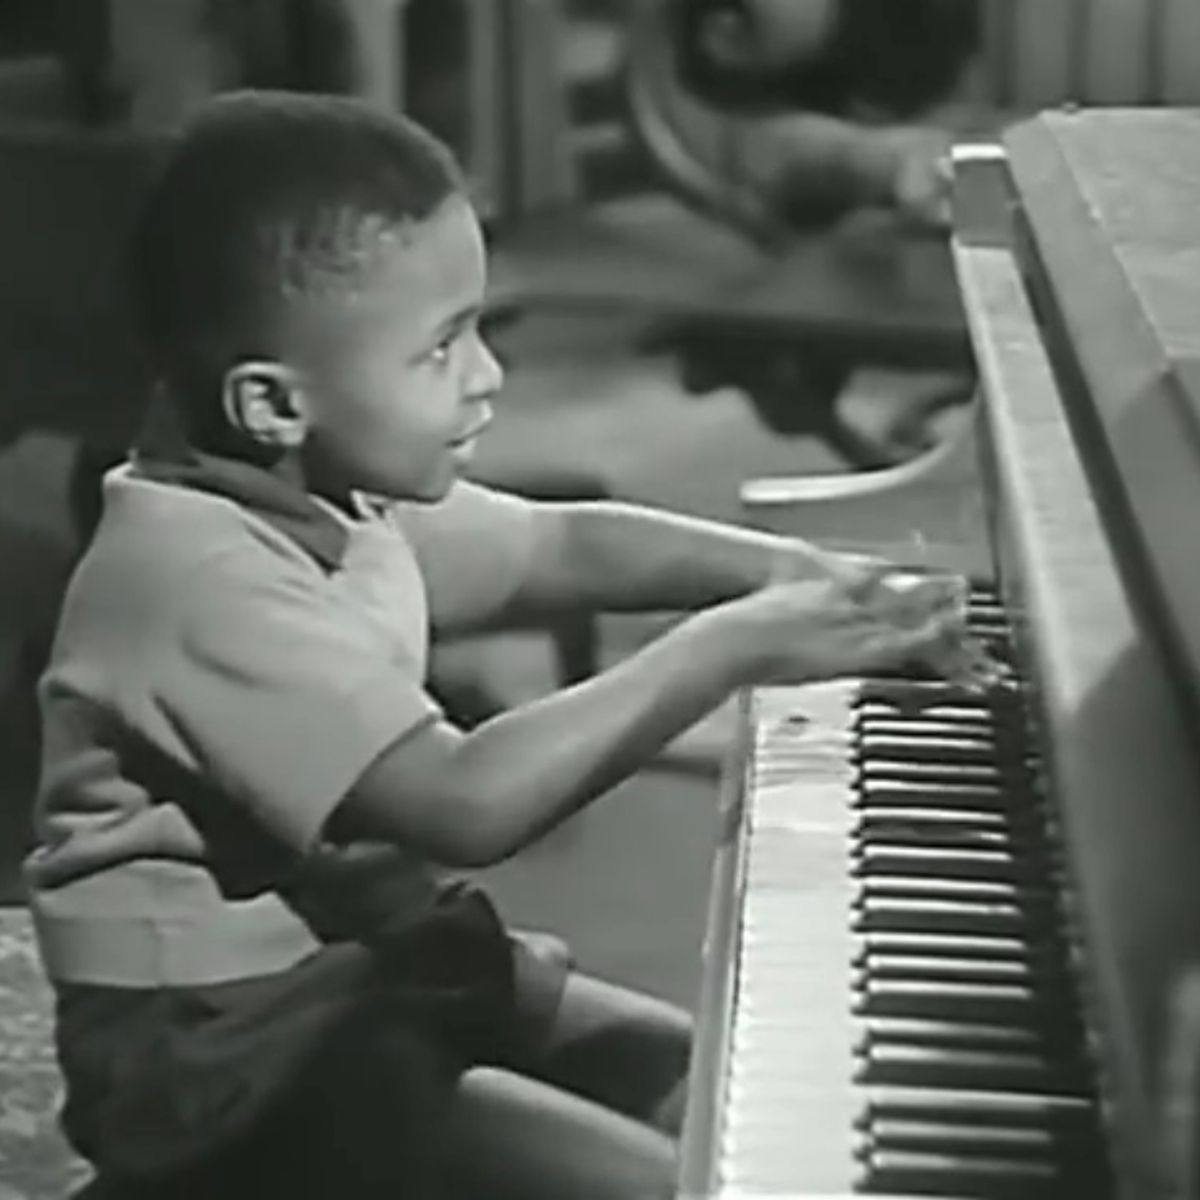 black kid playing piano